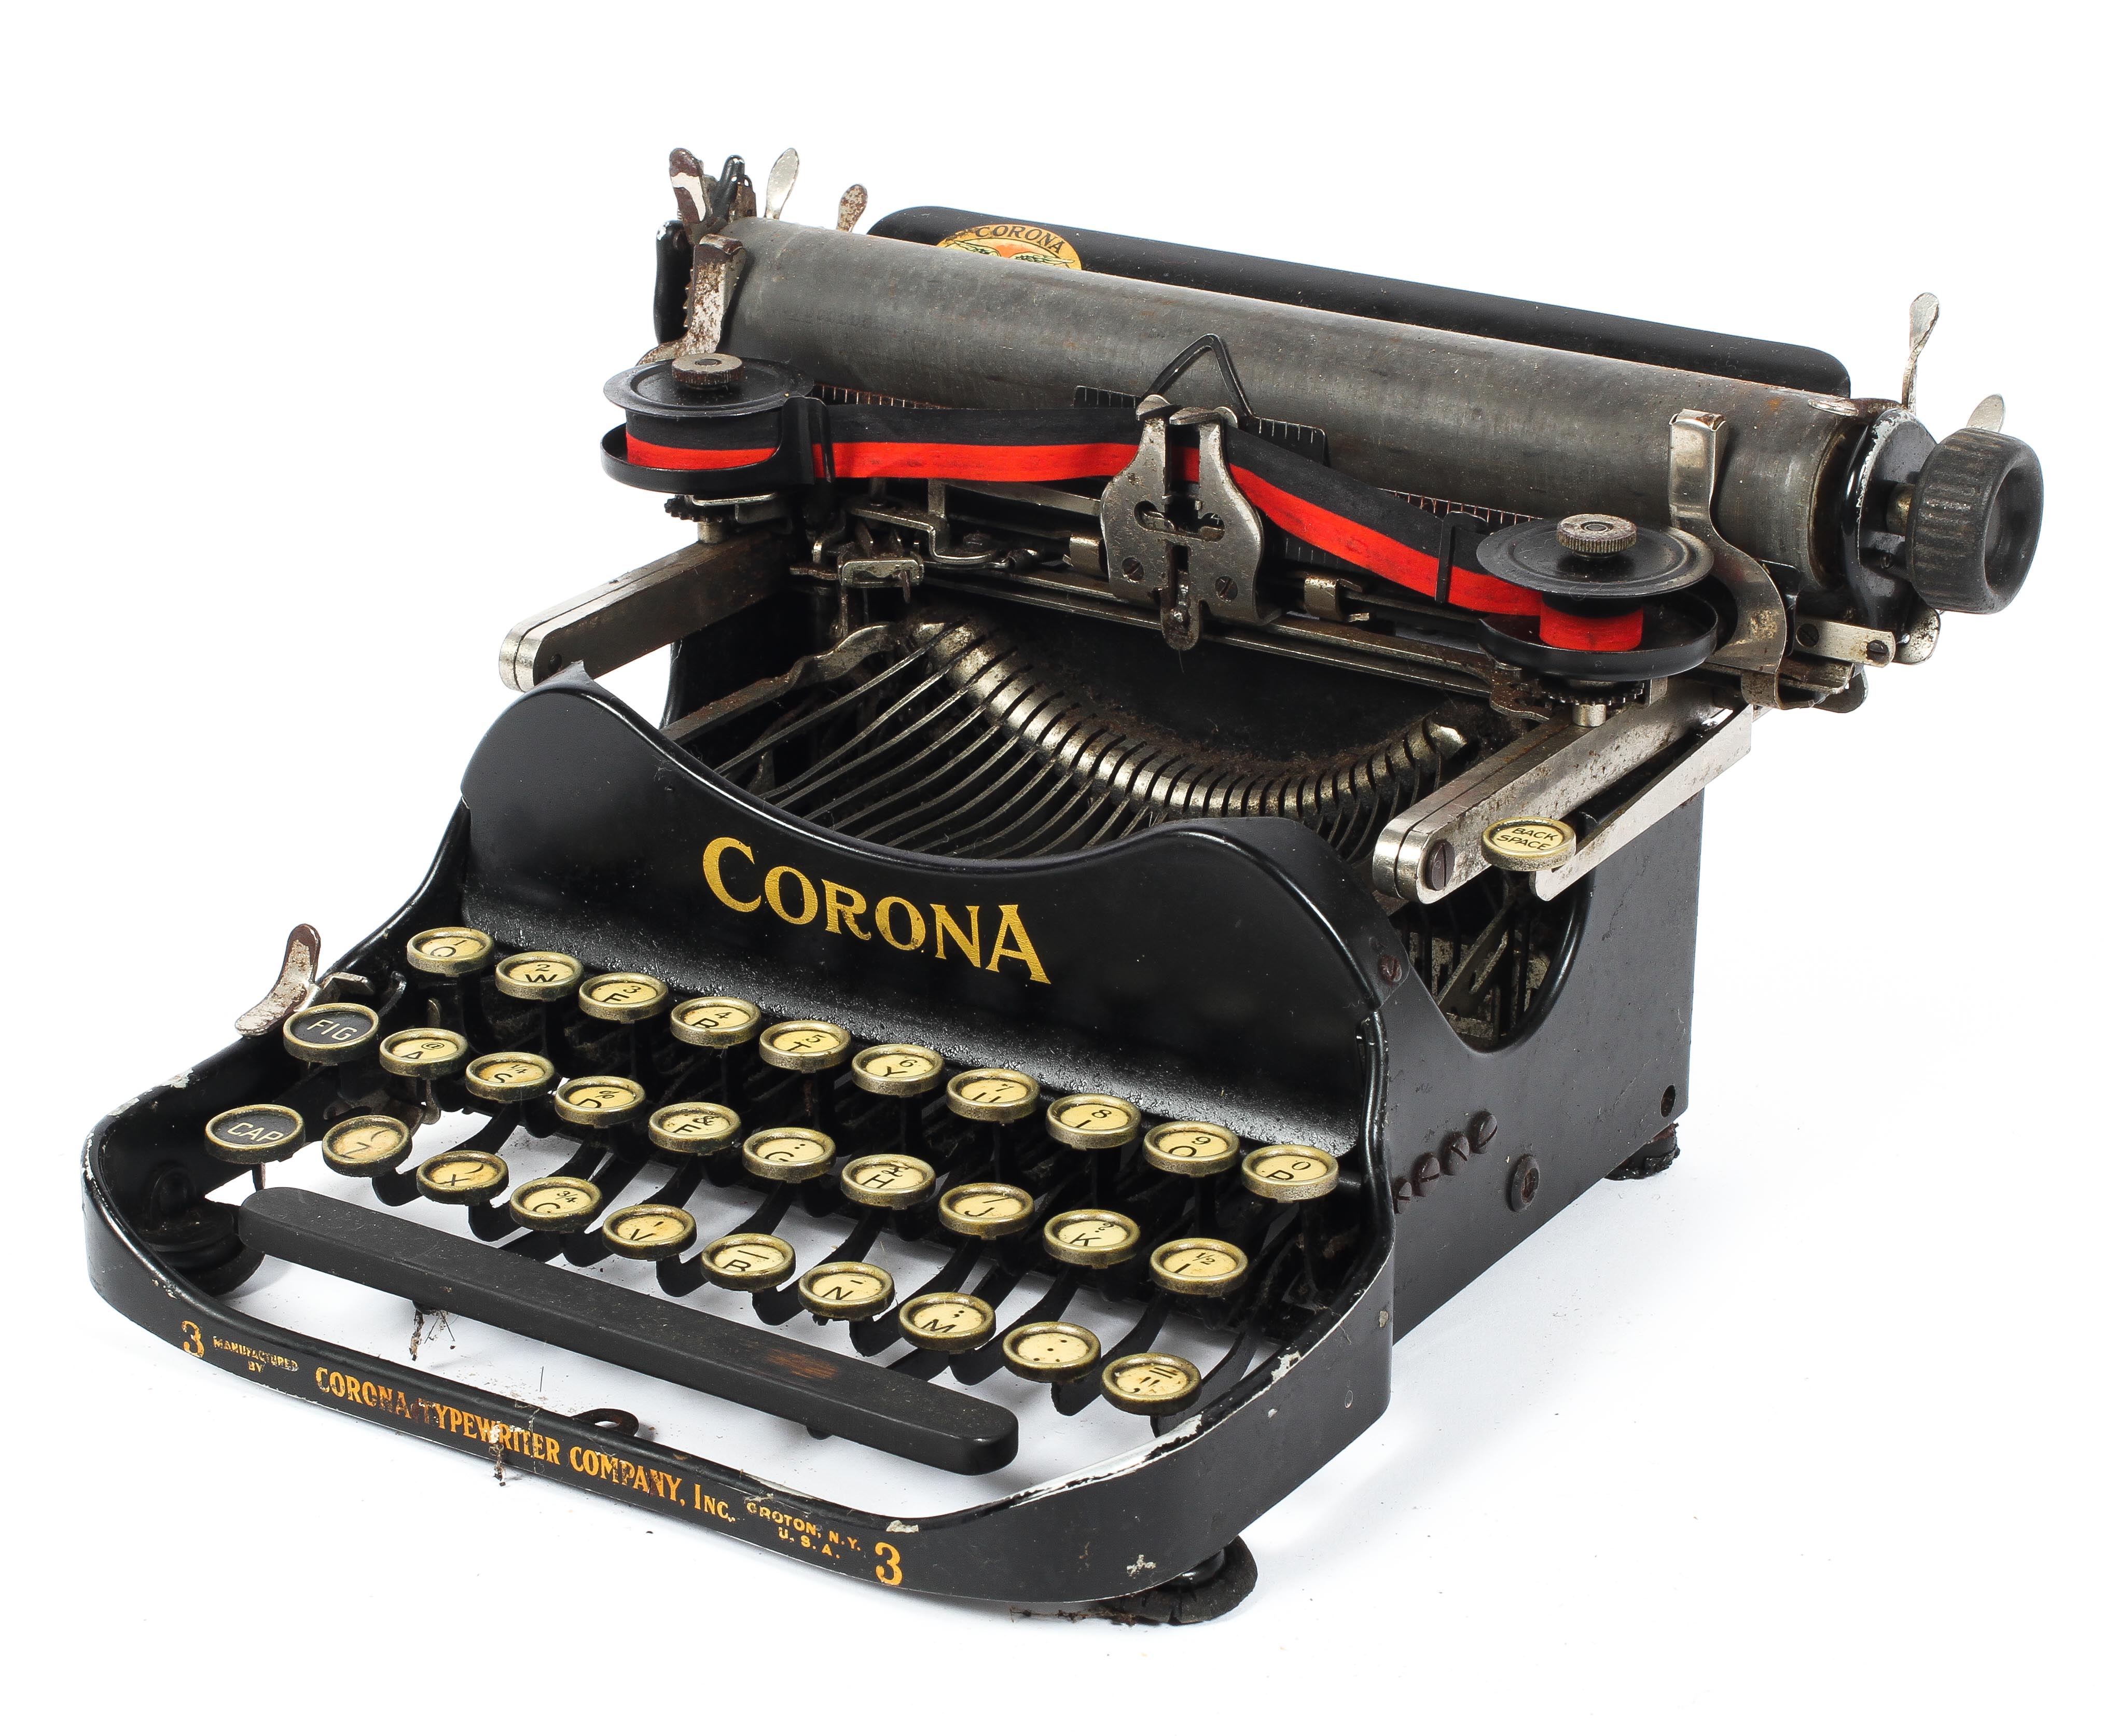 A vintage Corona folding travel typewriter model 3,